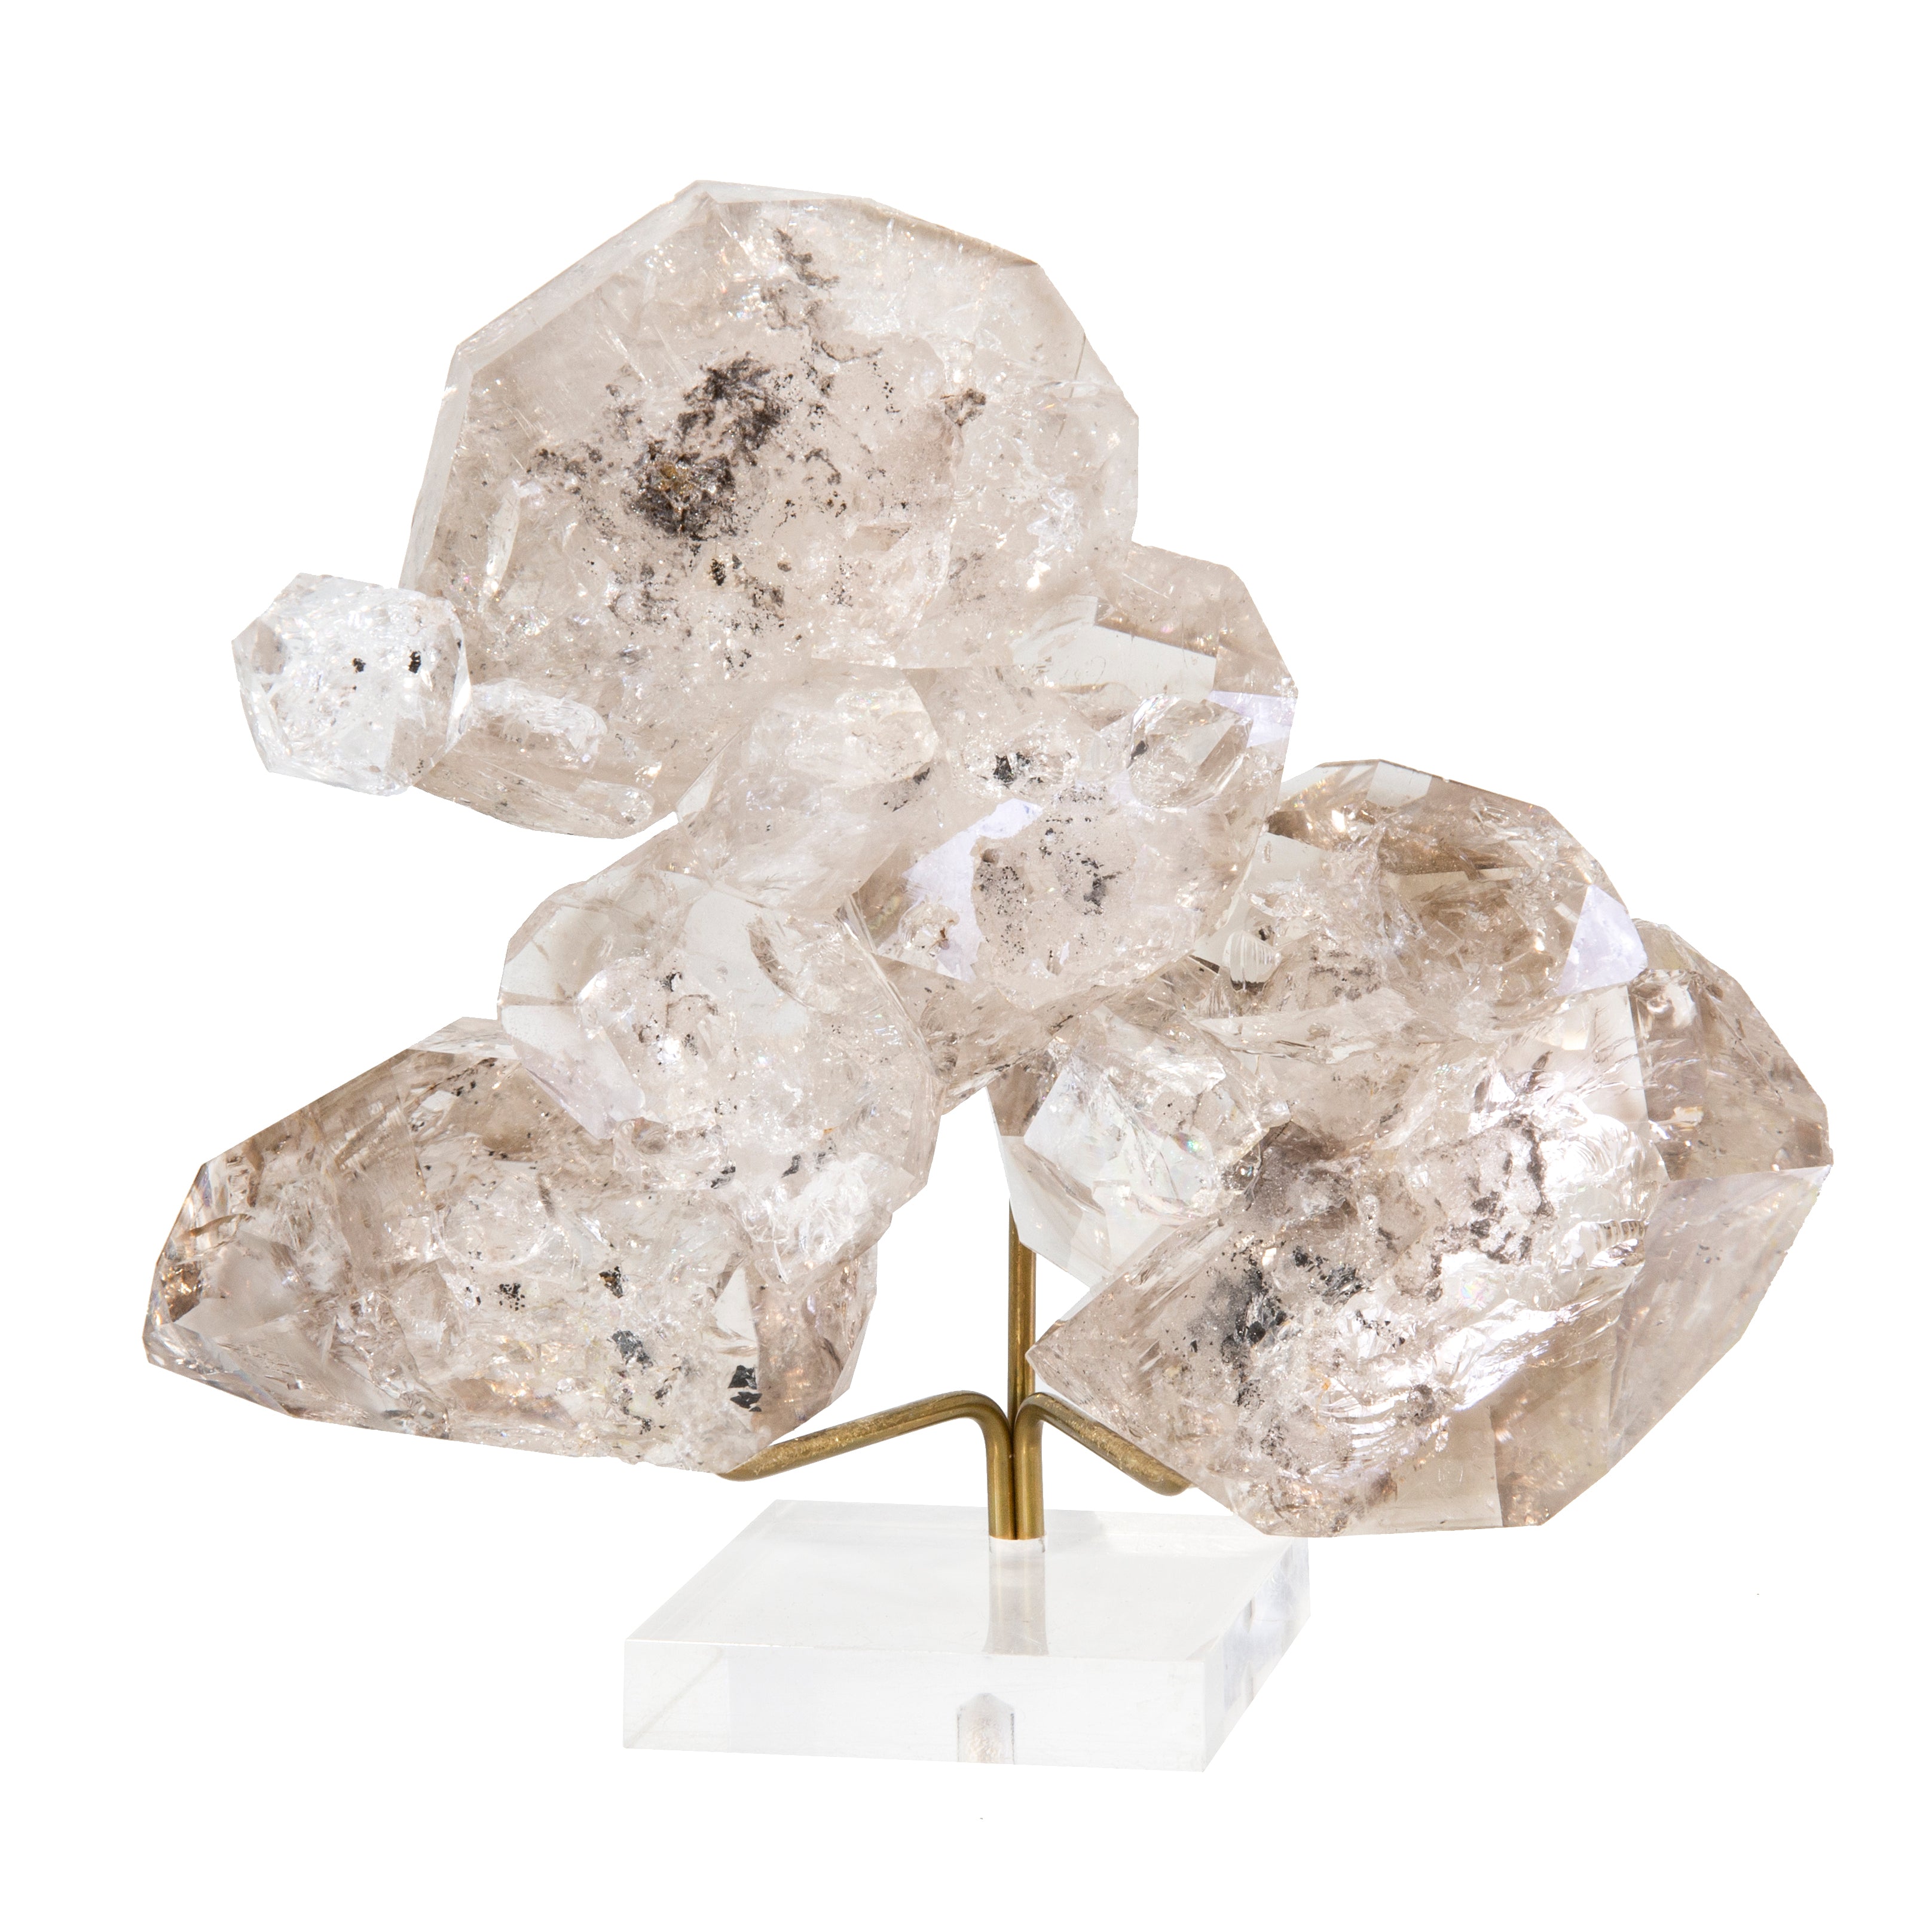 Exceptional Herkimer "Diamond" 6.5 inch 2.11 lb Crystal Chain Cluster - Herkimer, New York - JJX-184 - Crystalarium